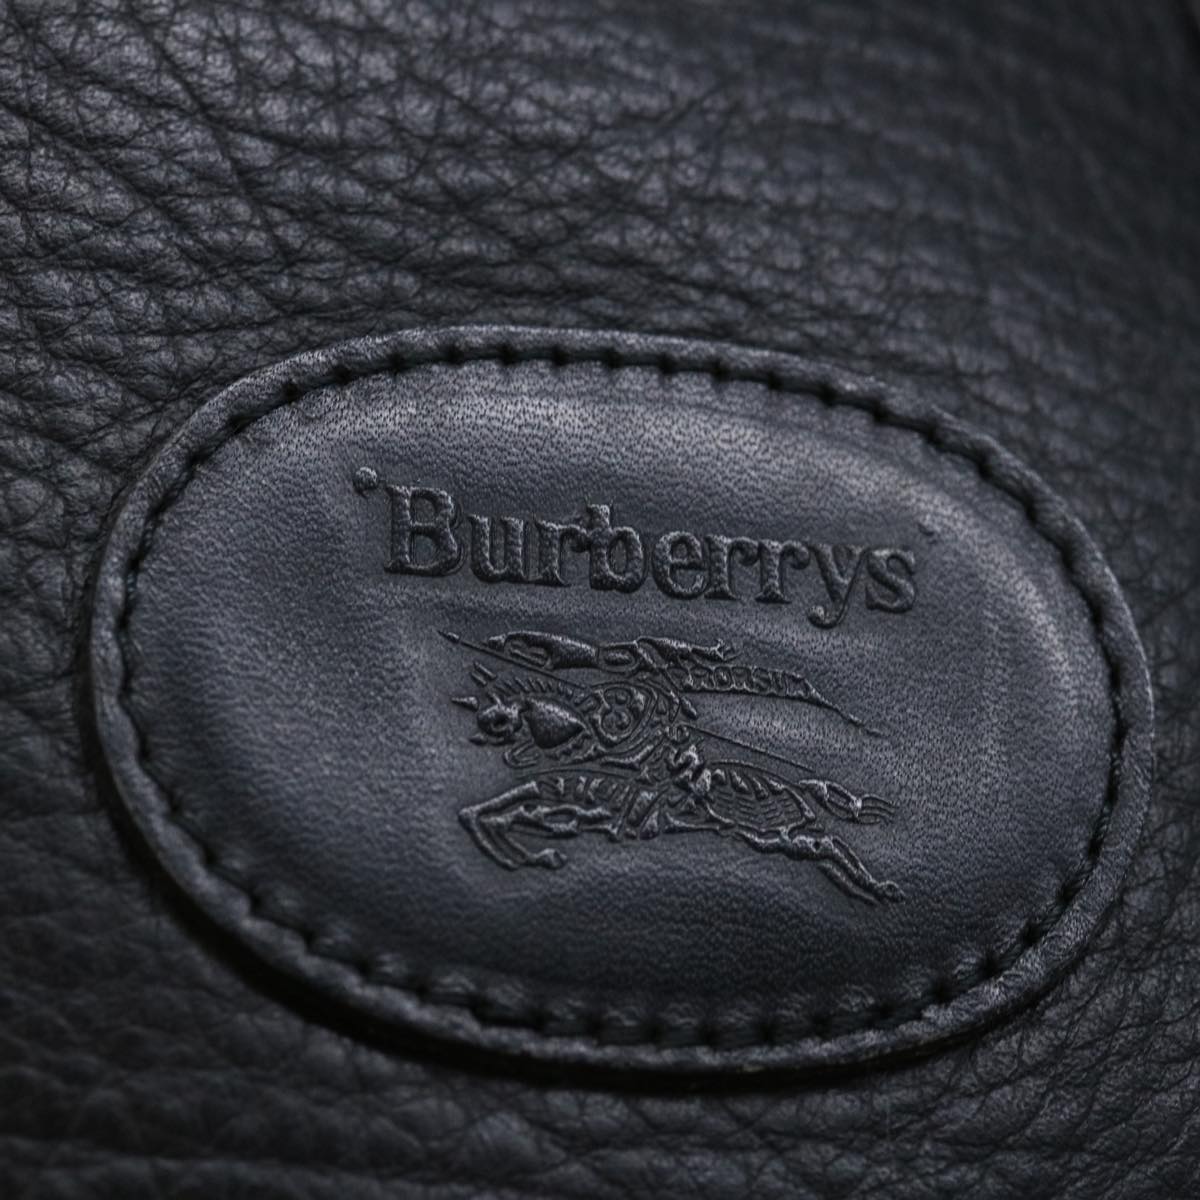 Burberrys Shoes case Hand Bag Leather Black Auth 72670